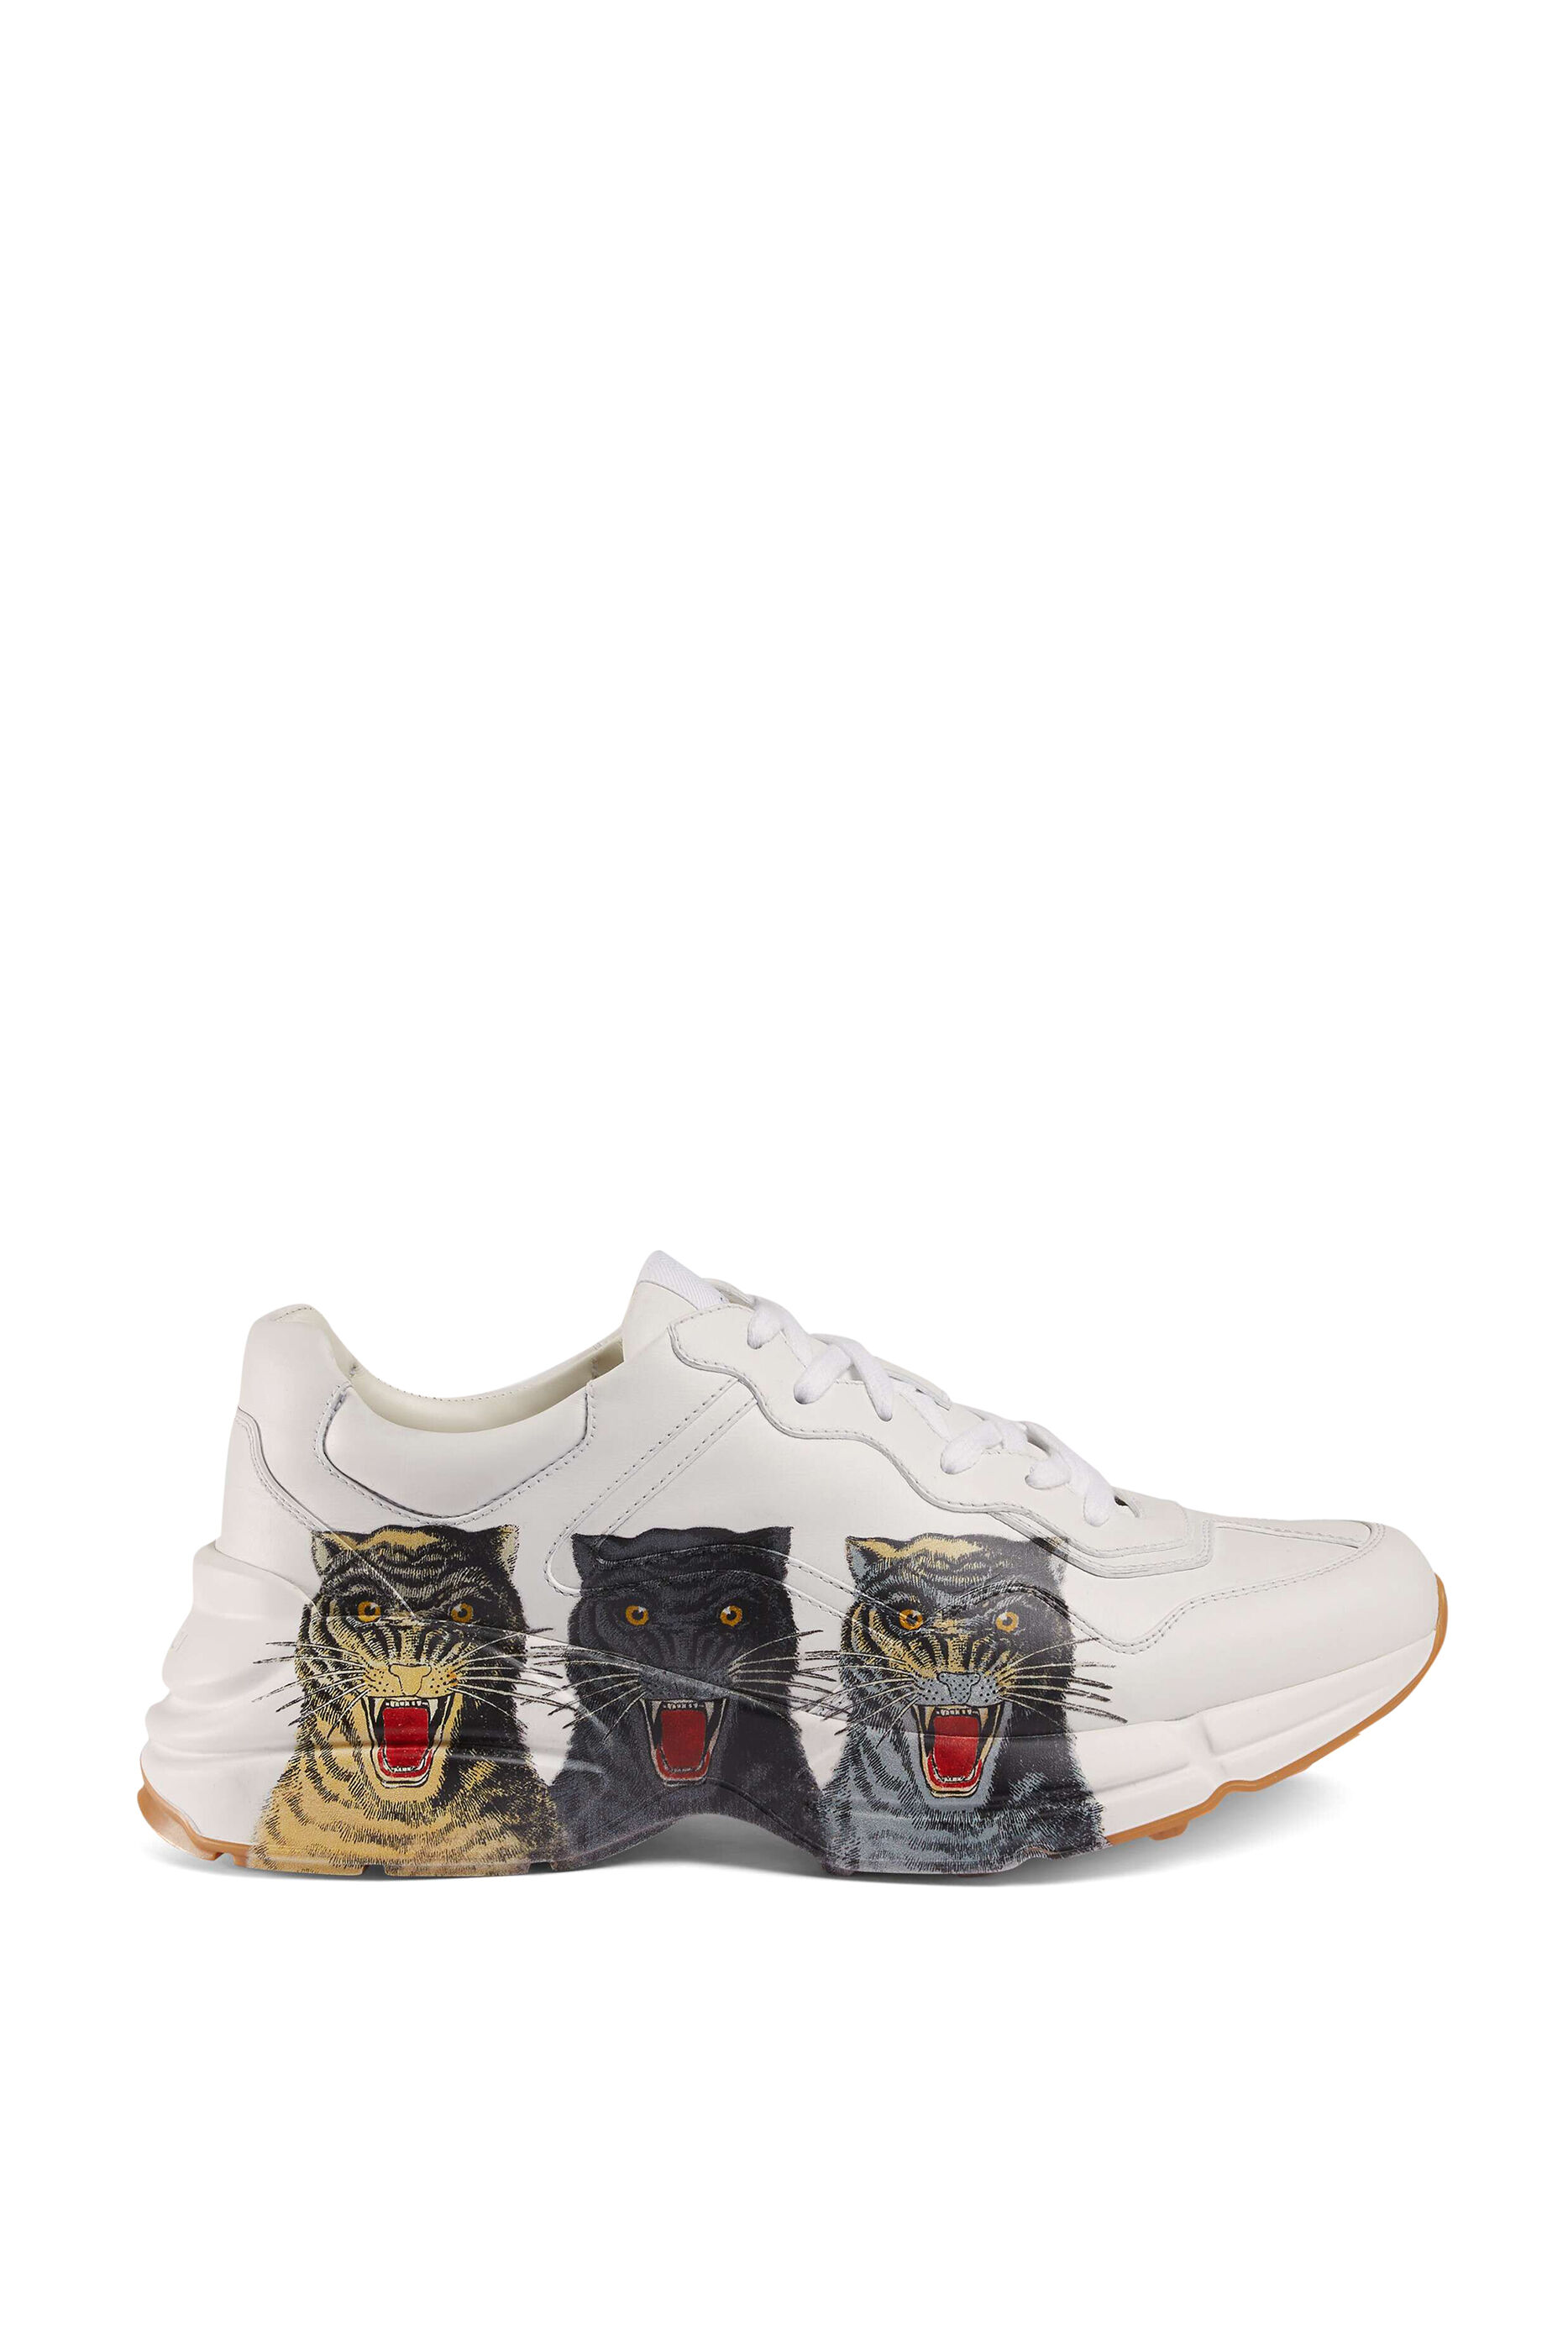 Buy Gucci Rhyton Tiger Print Sneakers 